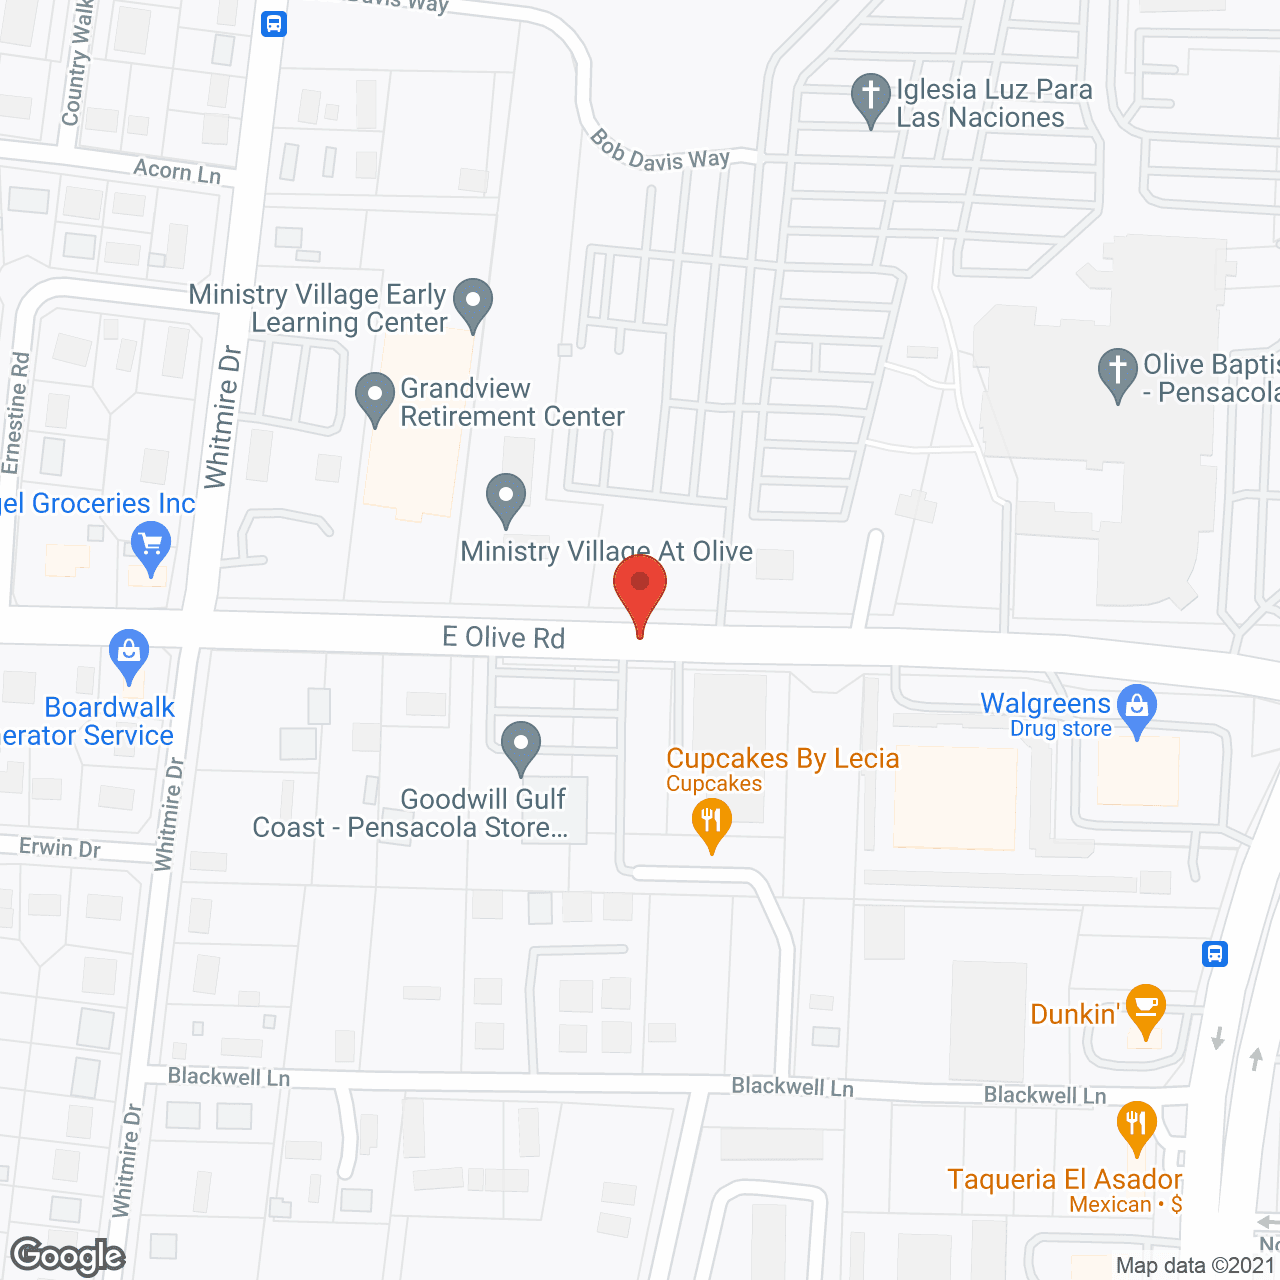 Grandview Retirement Center in google map